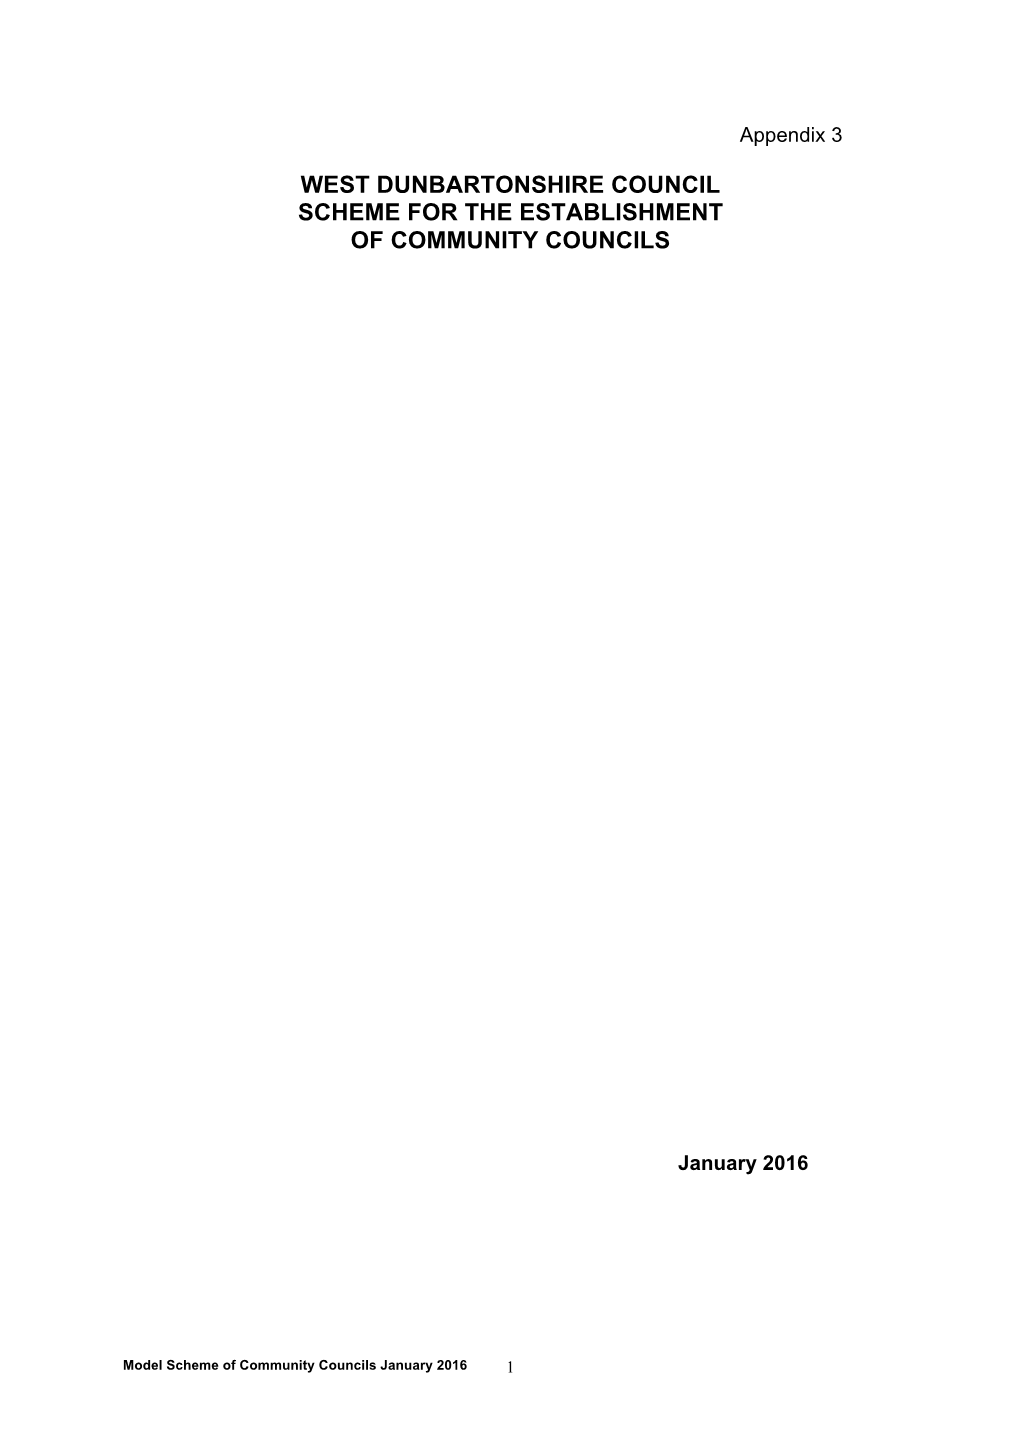 Community Council's Constitution